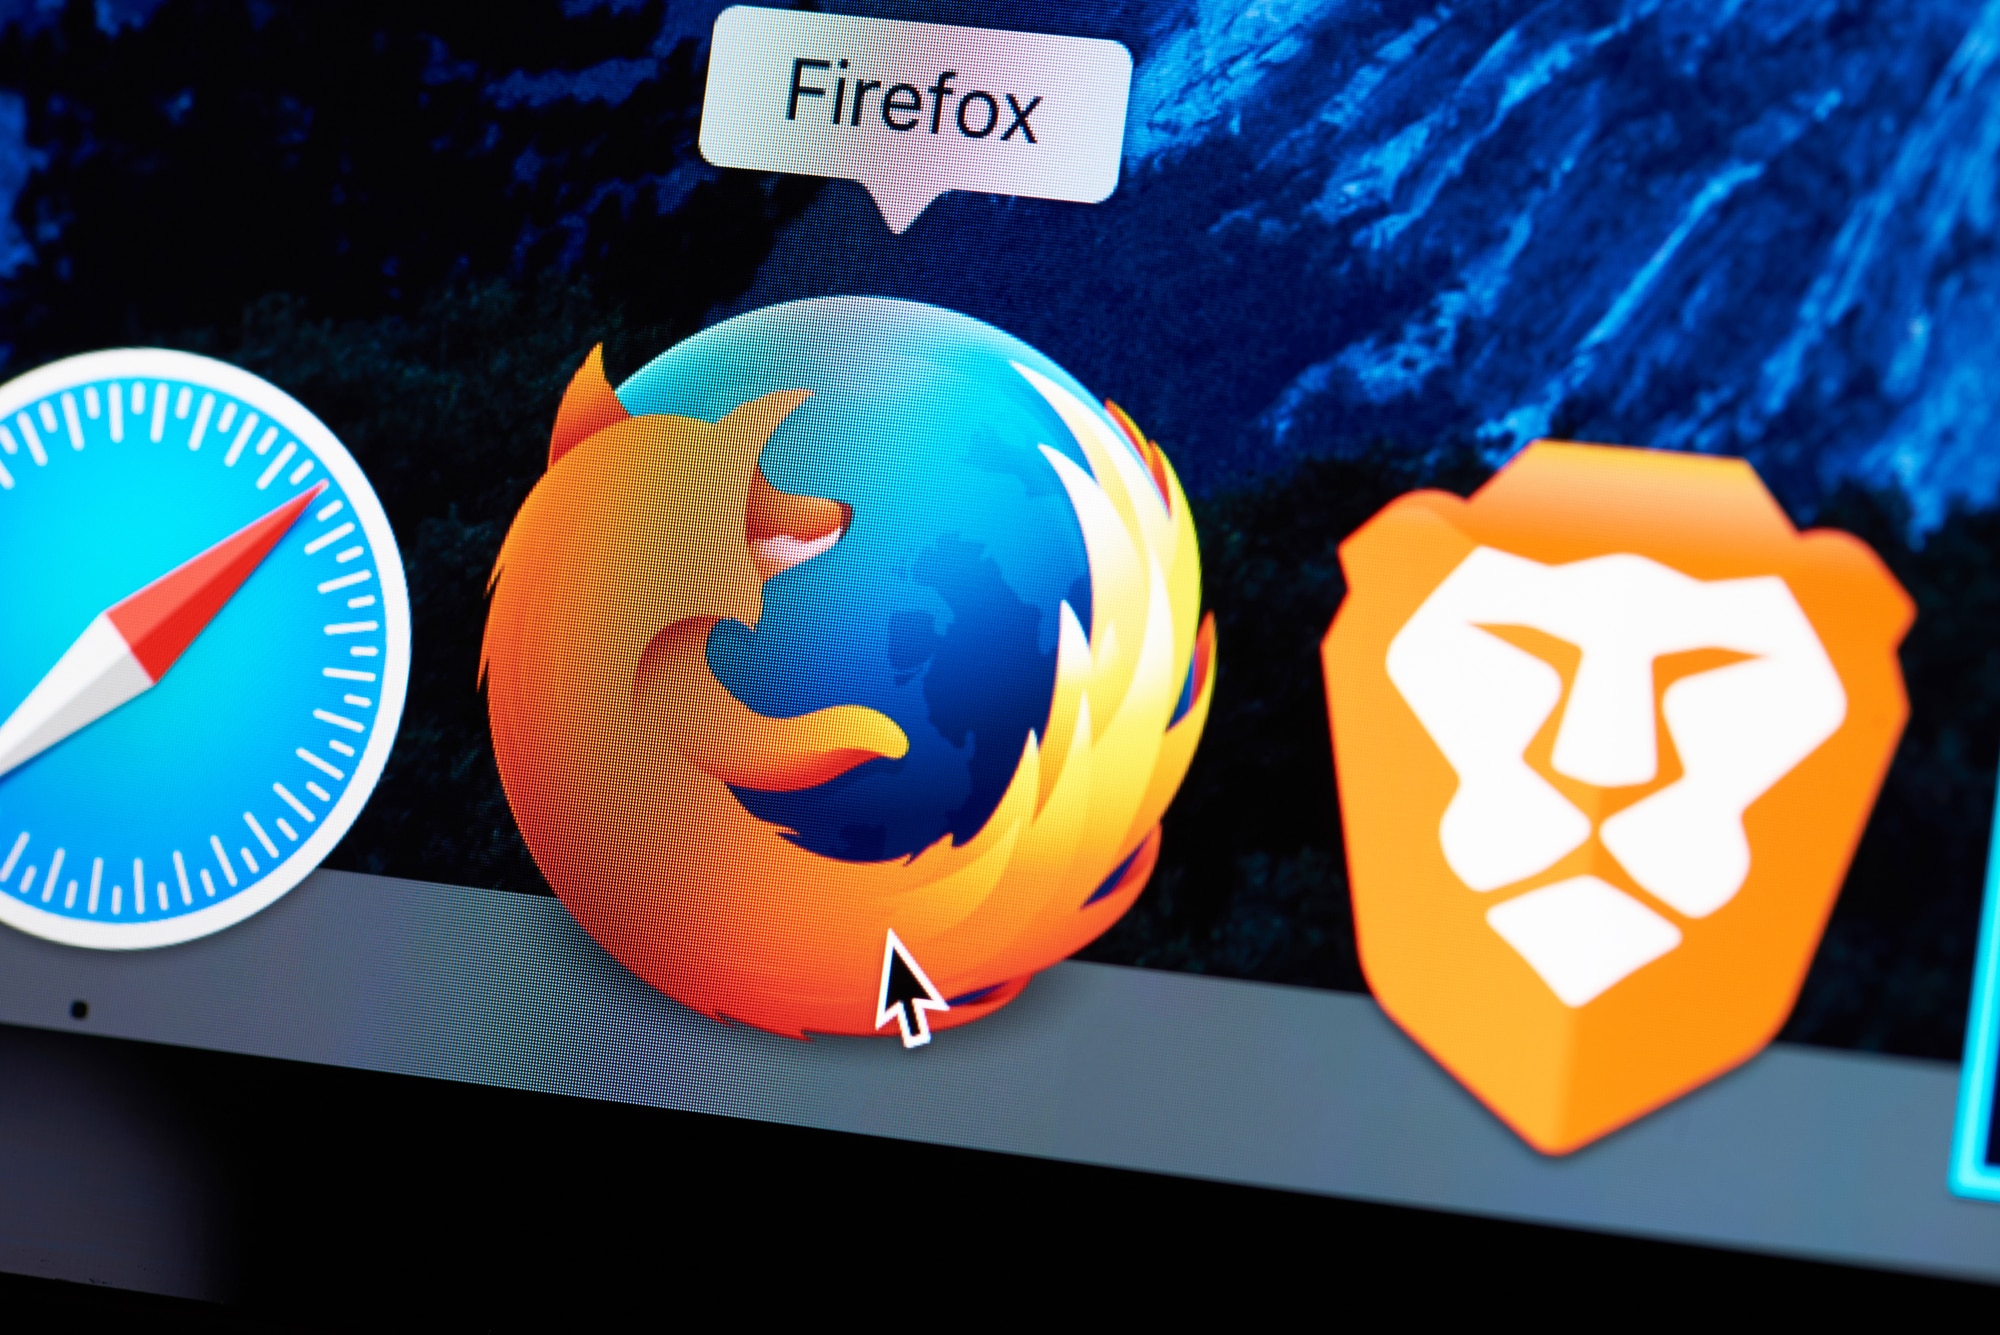 Brave와 Firefox 비교: 고유한 특징 및 기능